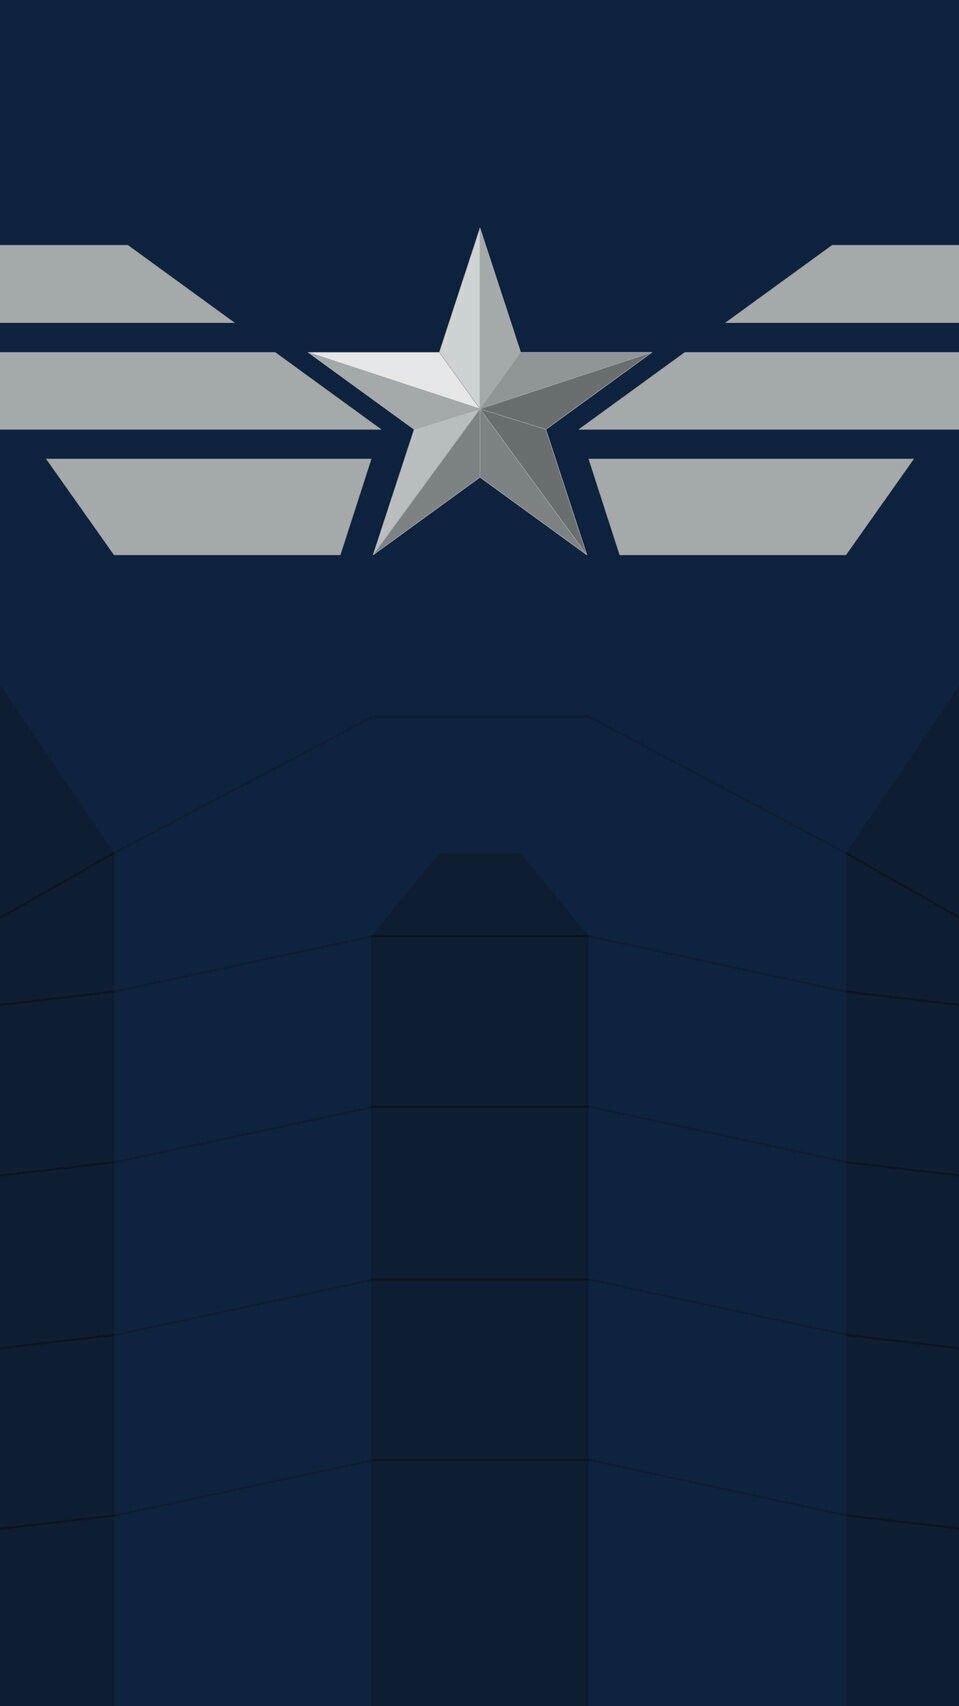 Captain America Logo Wallpapers